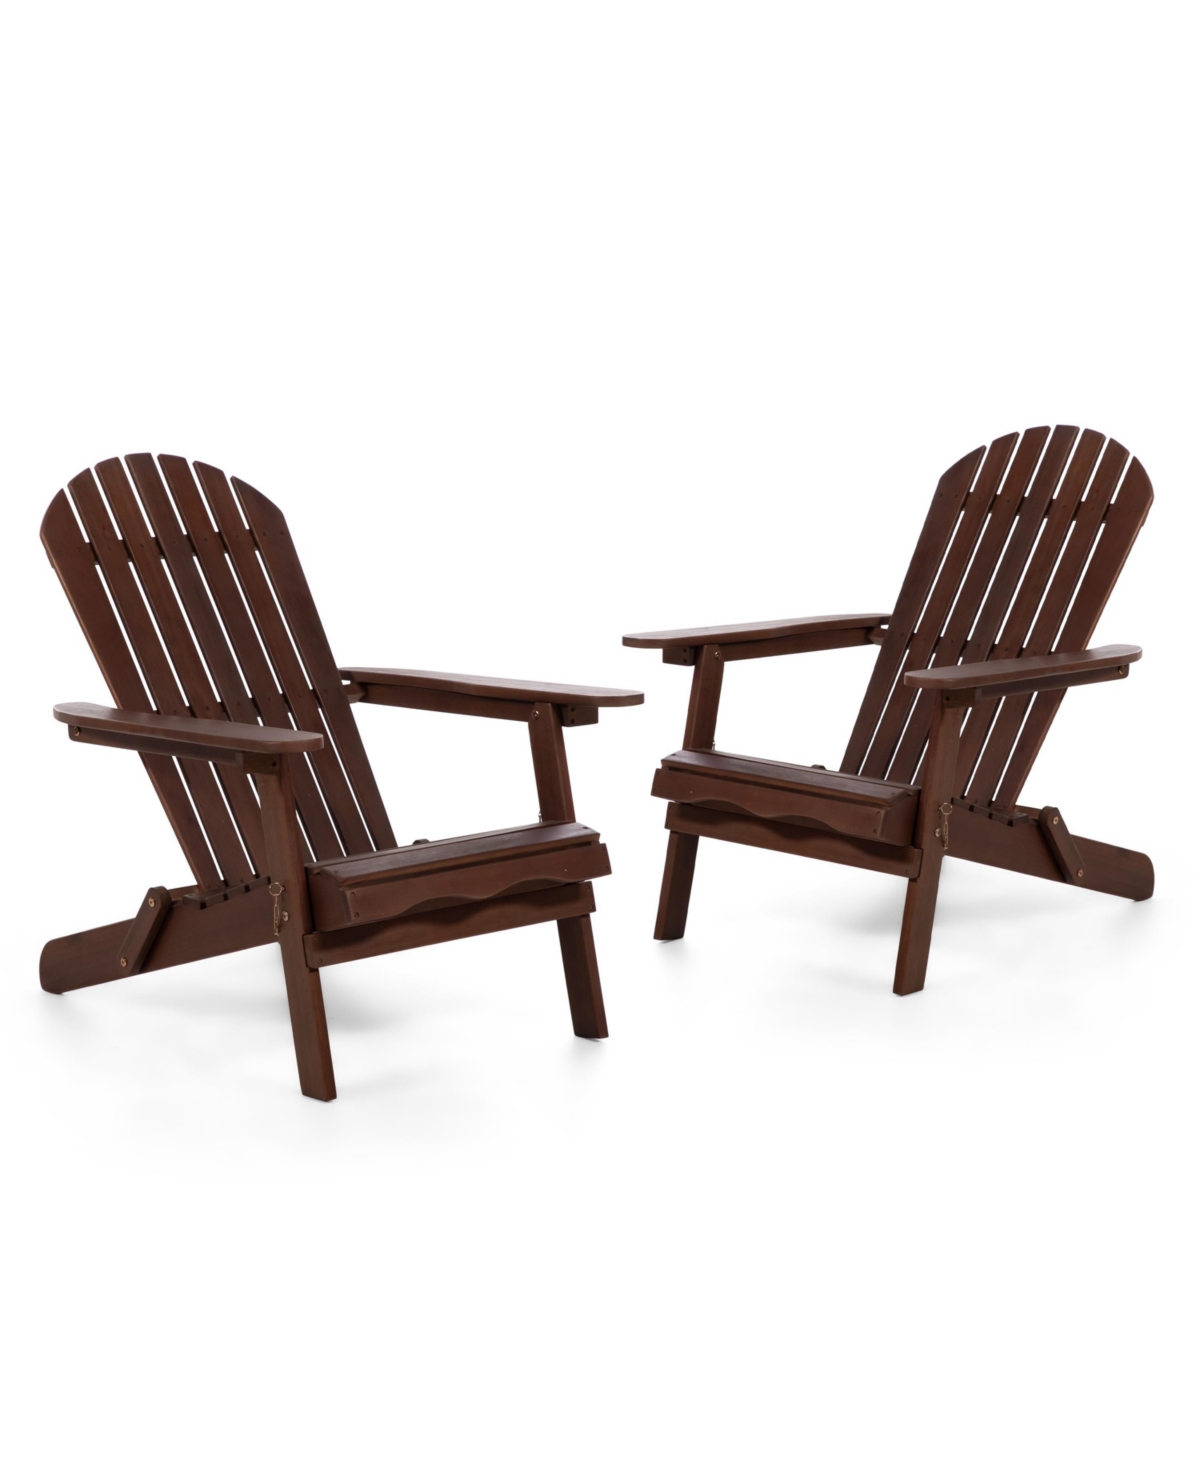 Furniture Of America 2 Piece Outdoor Eucalyptus Wood Folding Adirondrack Chairs In Dark Brown